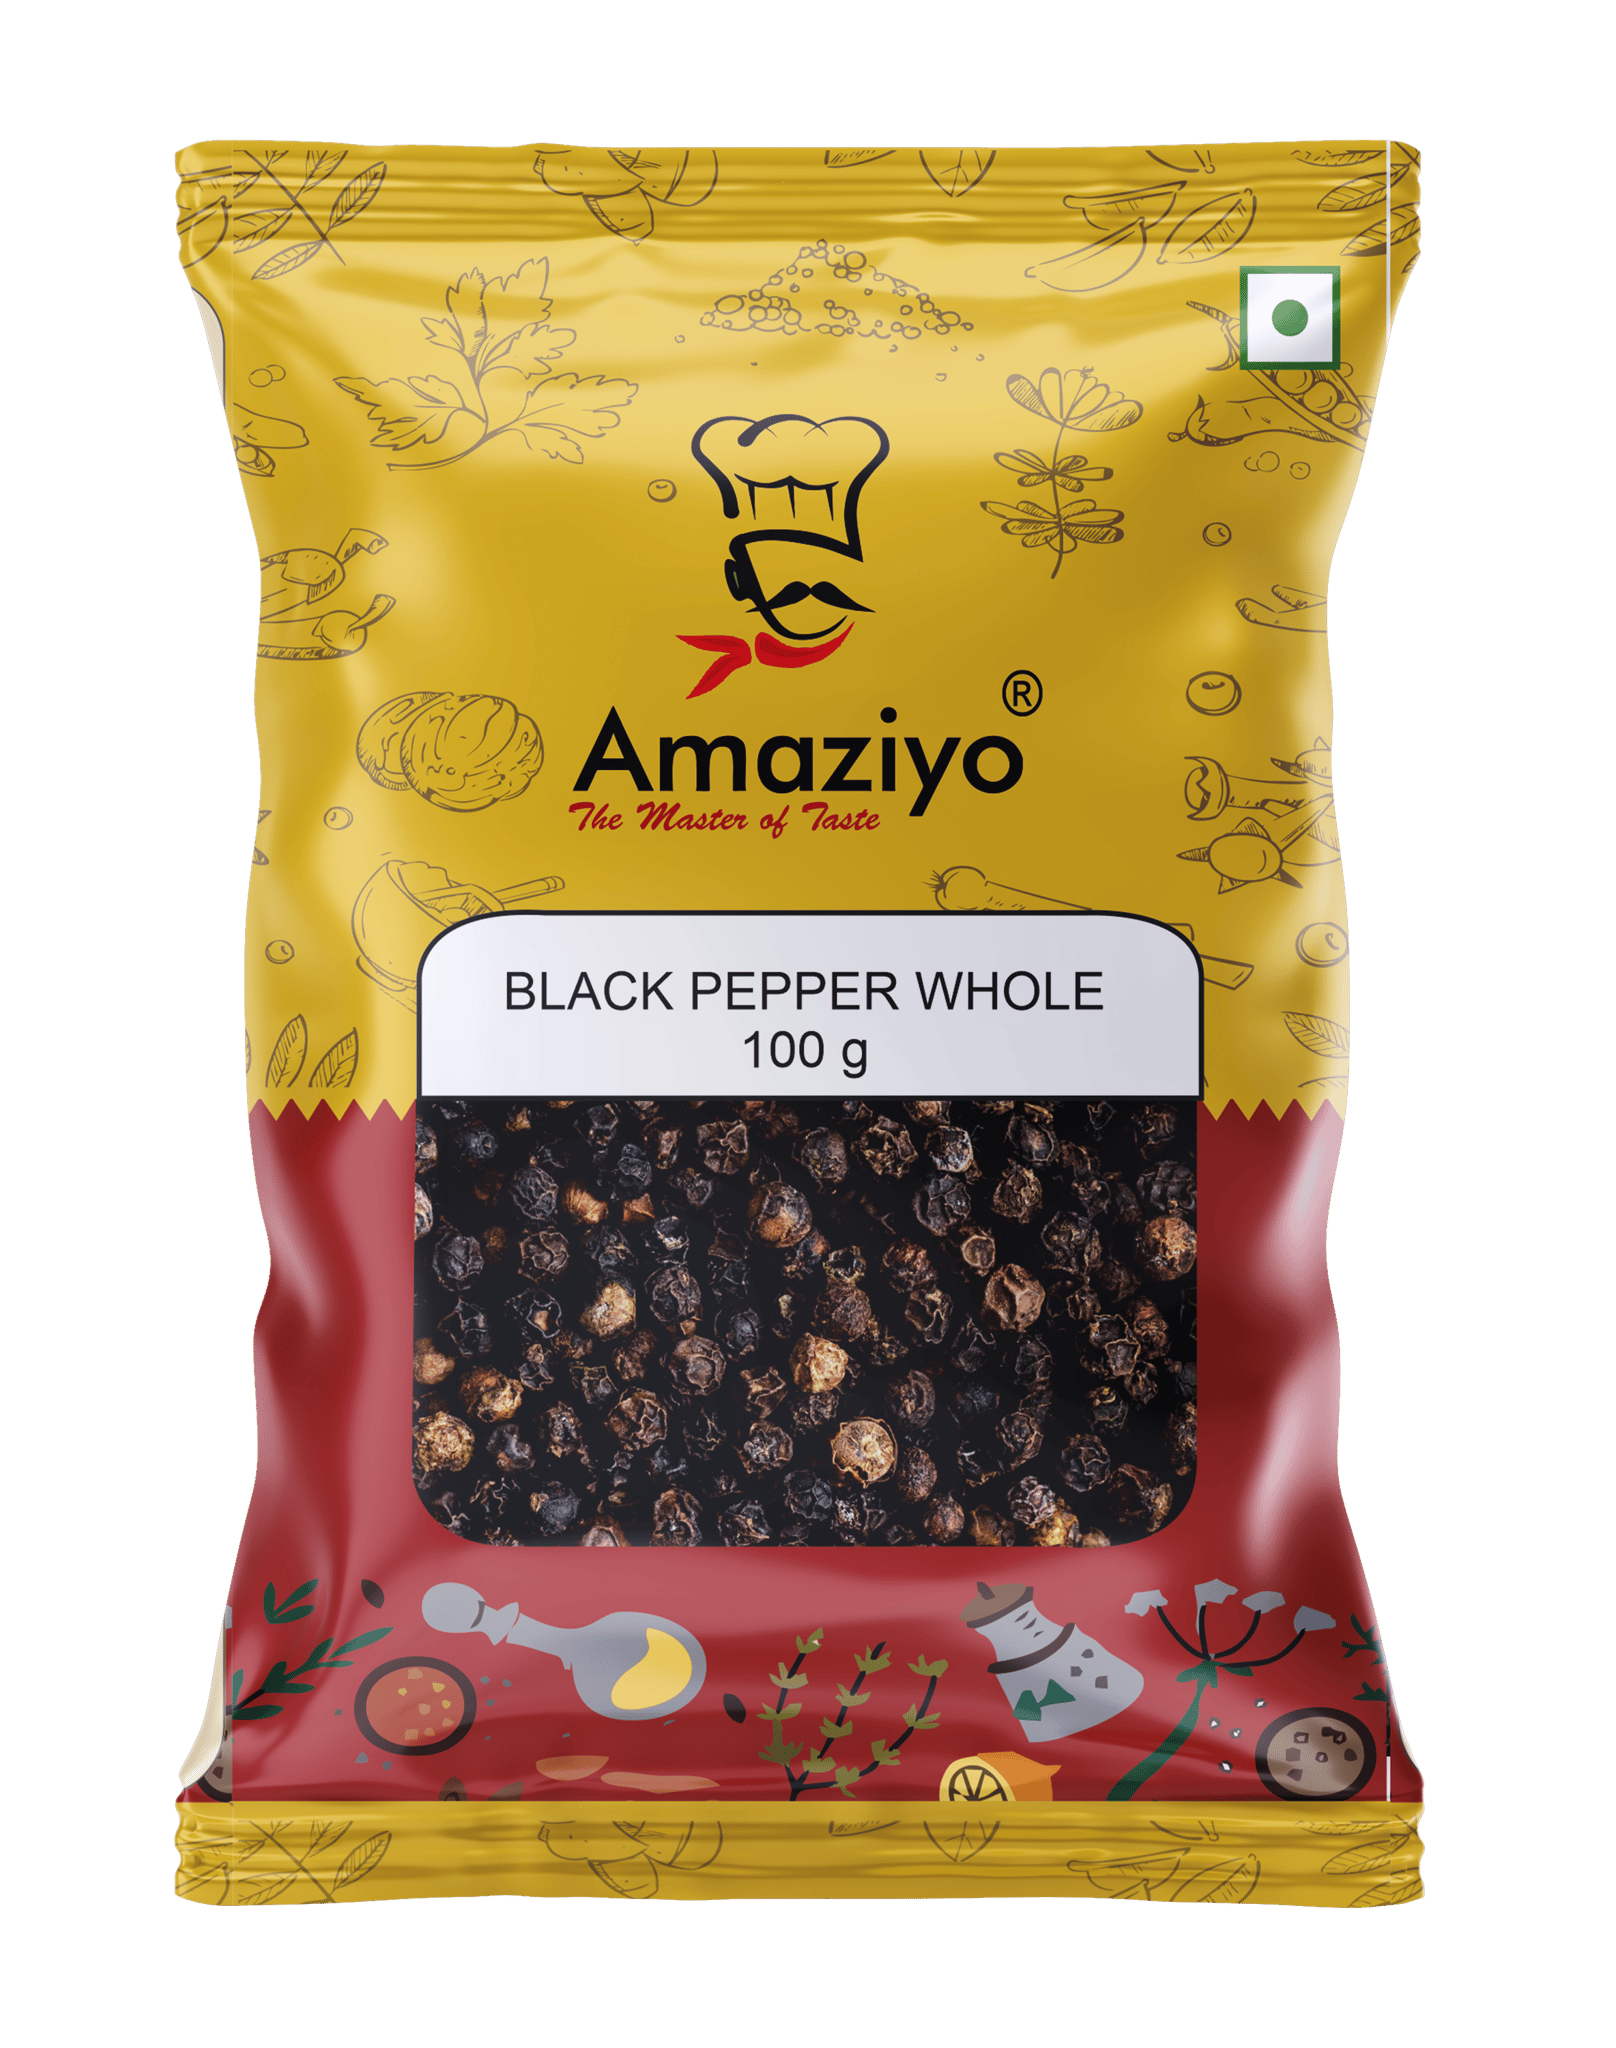 Amaziyo Black Pepper Whole 100g | Kali Mirch Whole